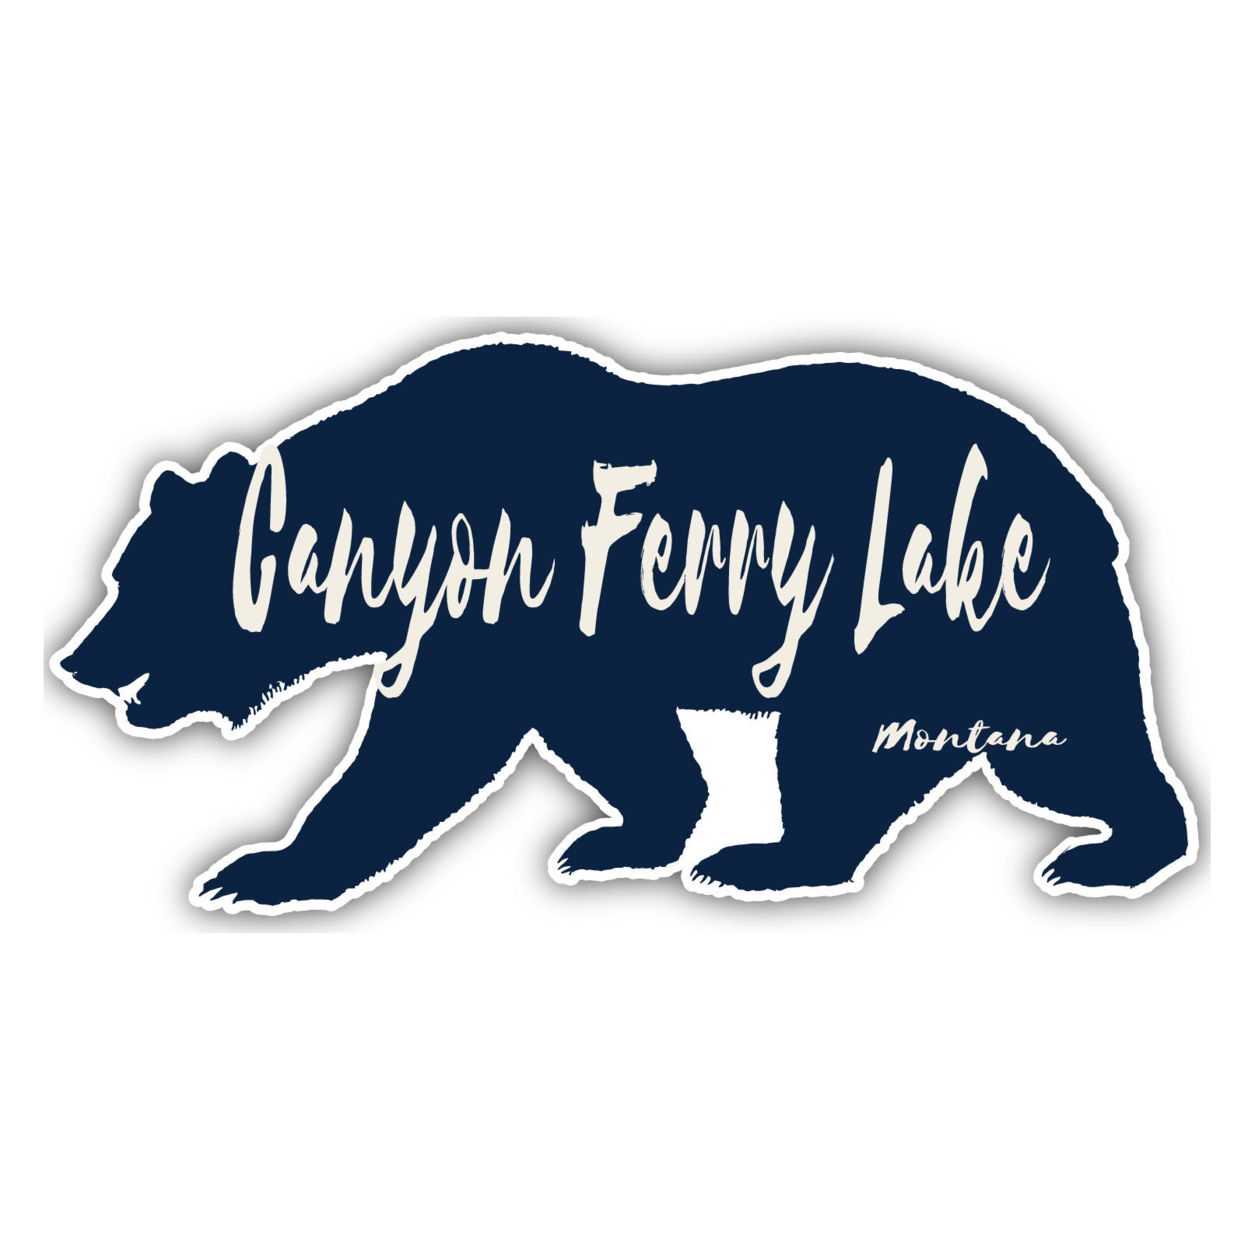 Canyon Ferry Lake Montana Souvenir Decorative Stickers (Choose Theme And Size) - Single Unit, 12-Inch, Bear